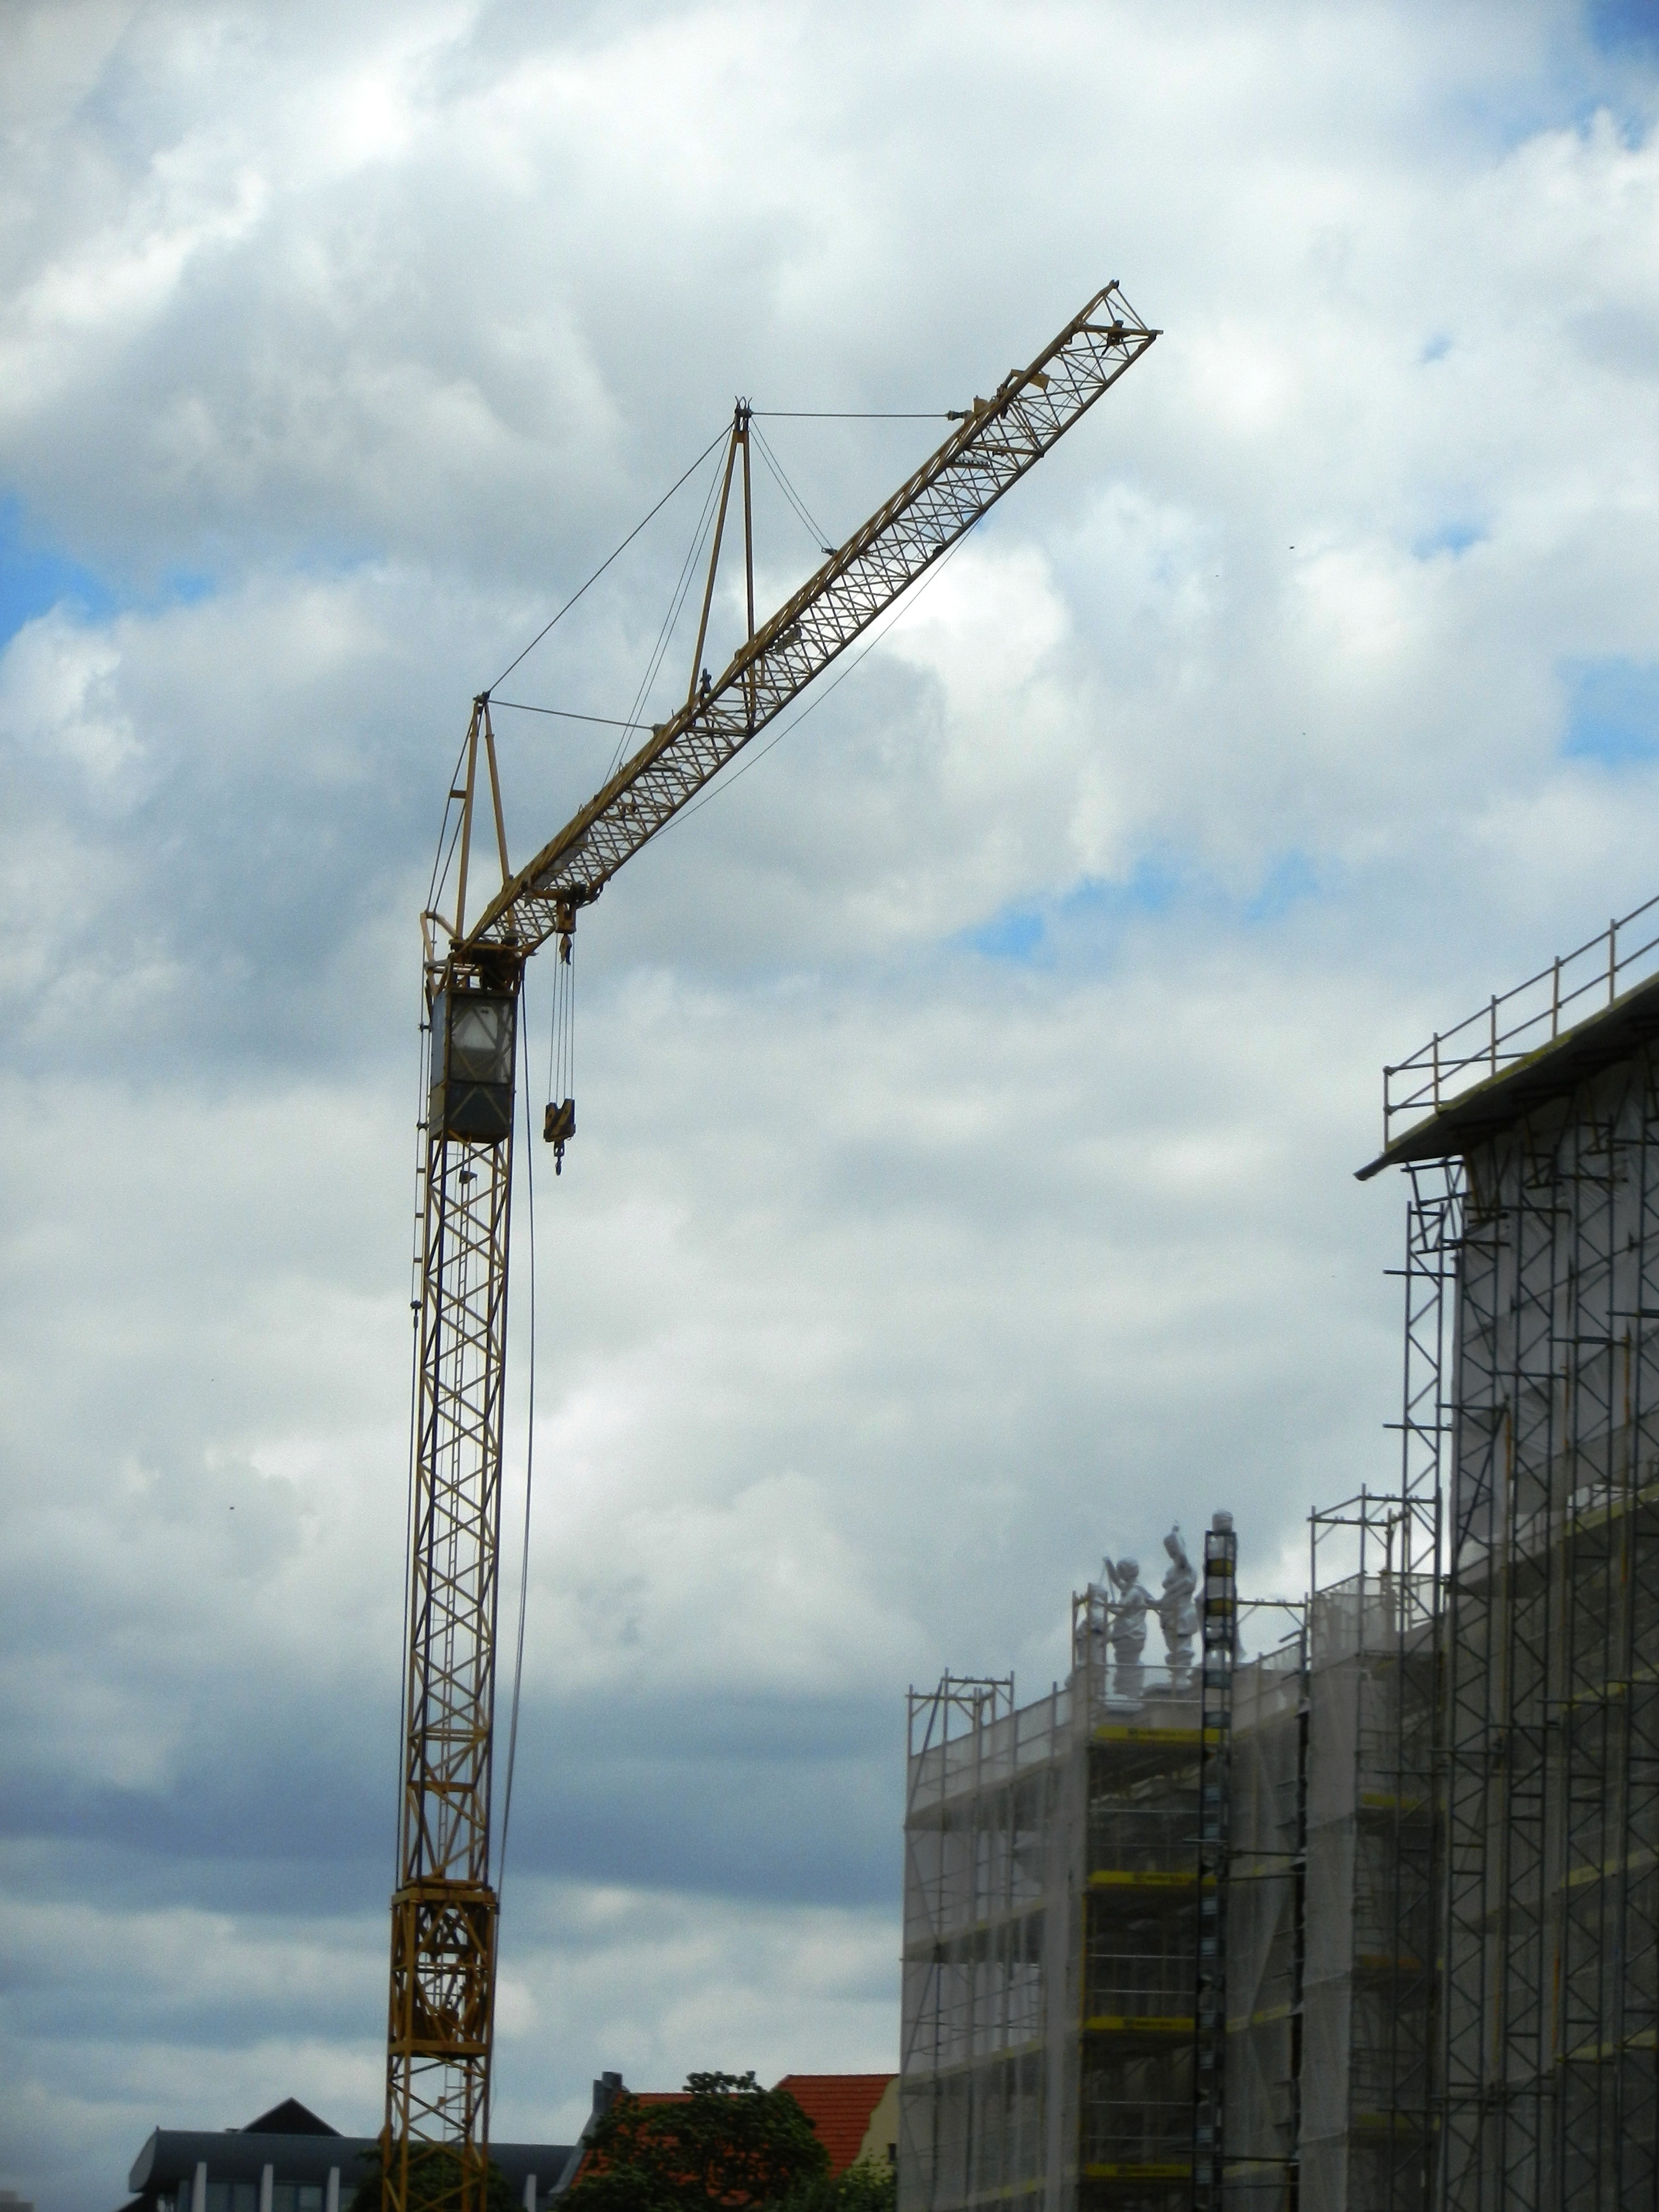 black crane near concrete building under cloudy sky at daytime